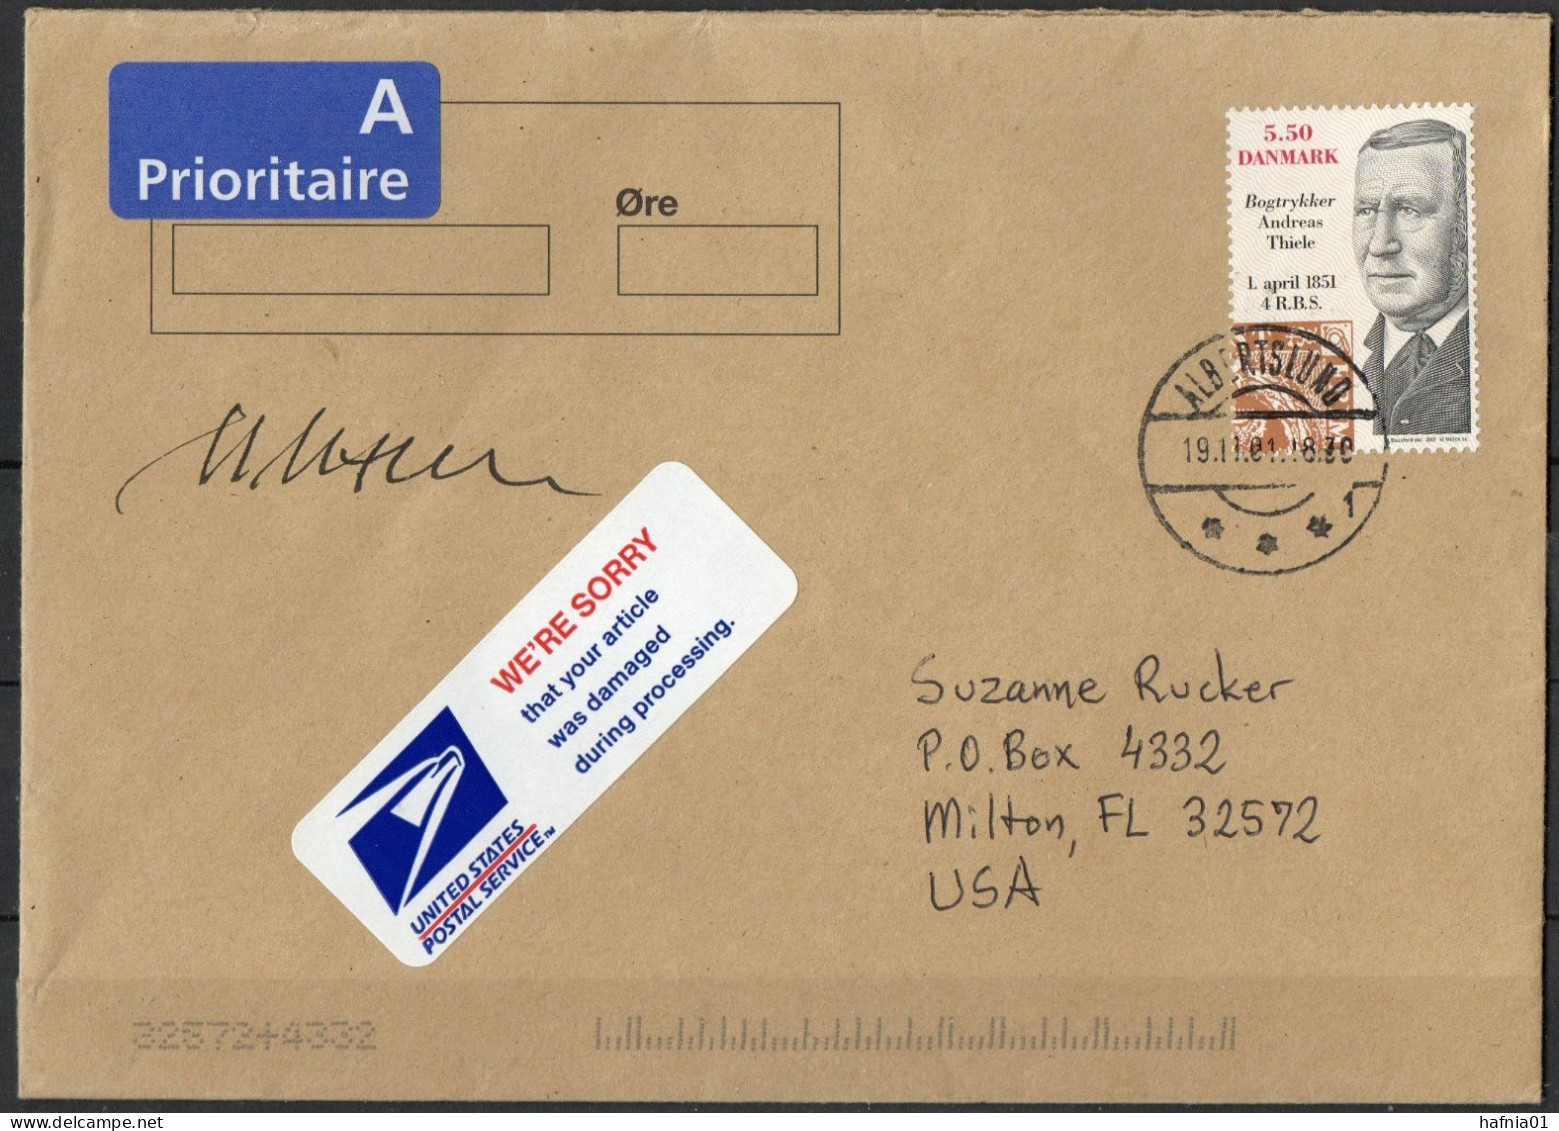 Martin Mörck. Denmark 2001. 150 Anniv Danish Stamps. Ordinary Letter Sent To USA. Signed. - Briefe U. Dokumente